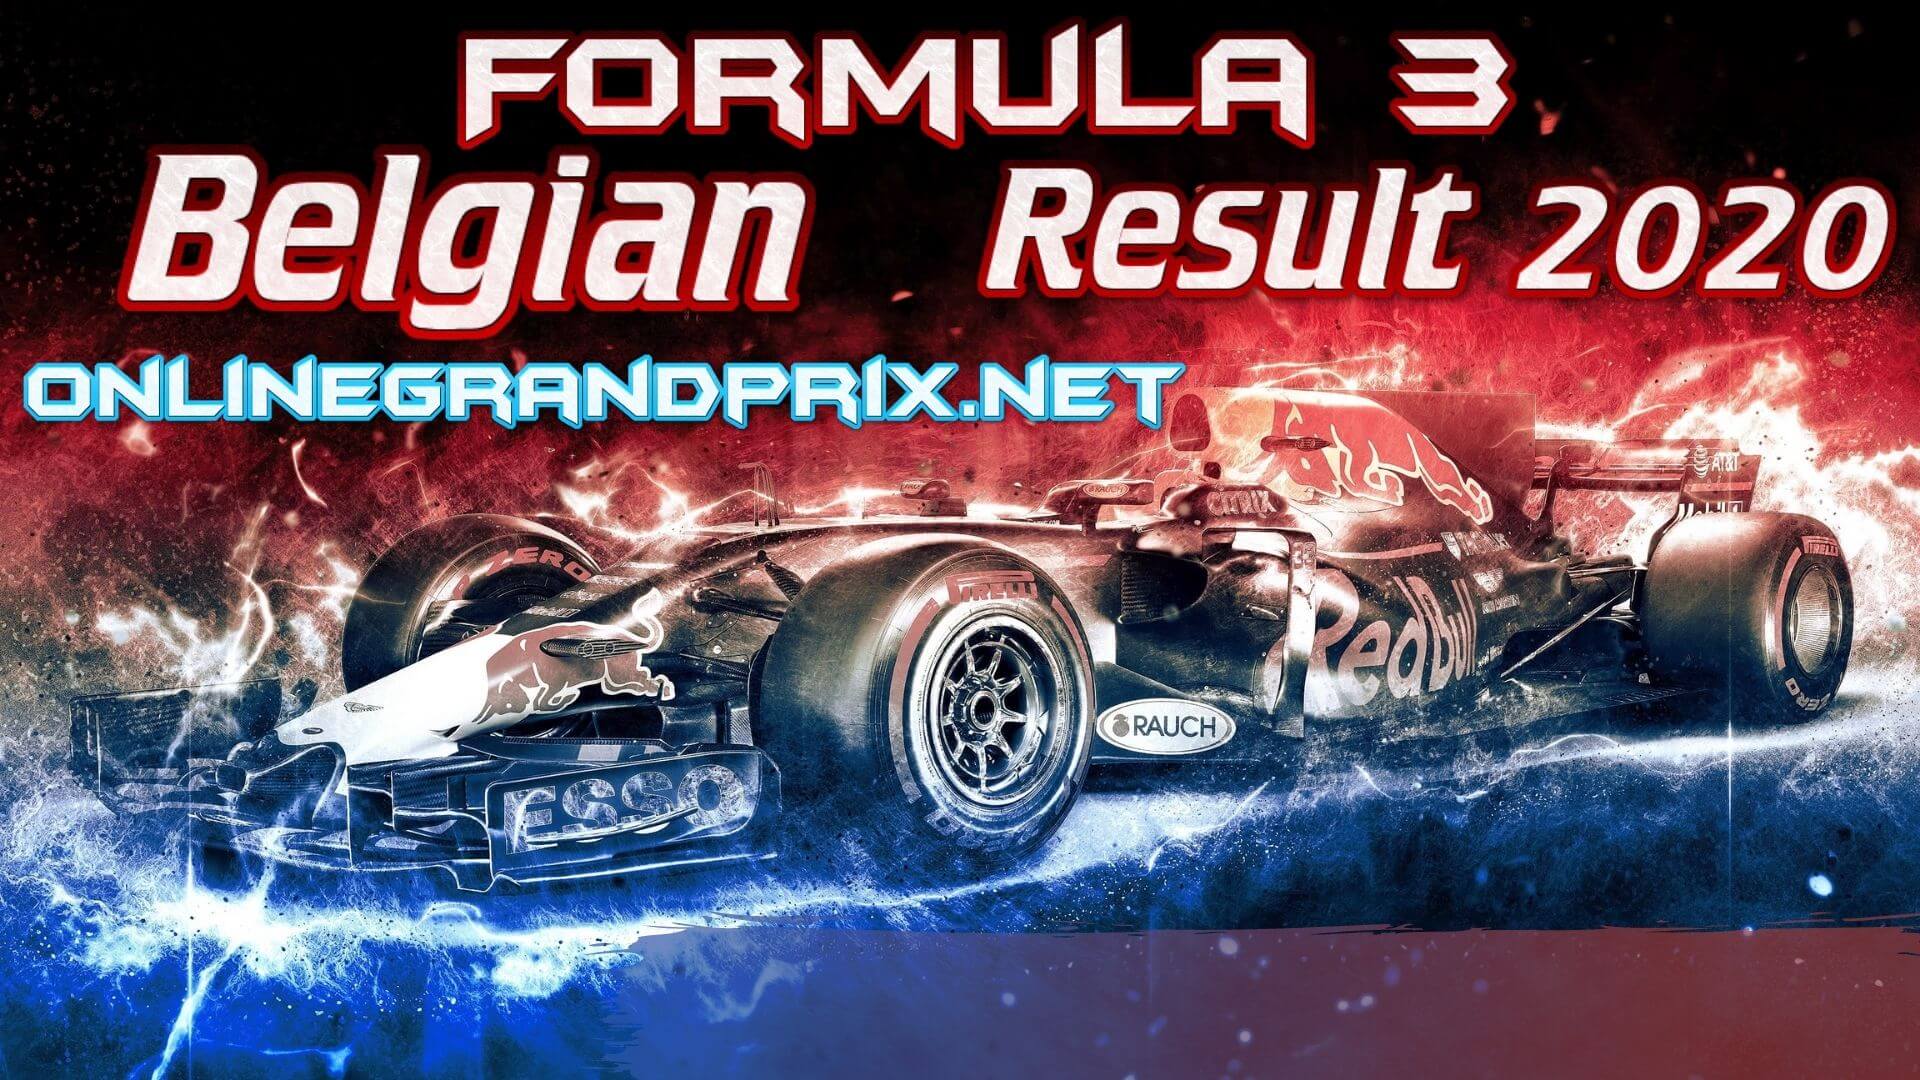 Belgian GP F3 Highlights 2020